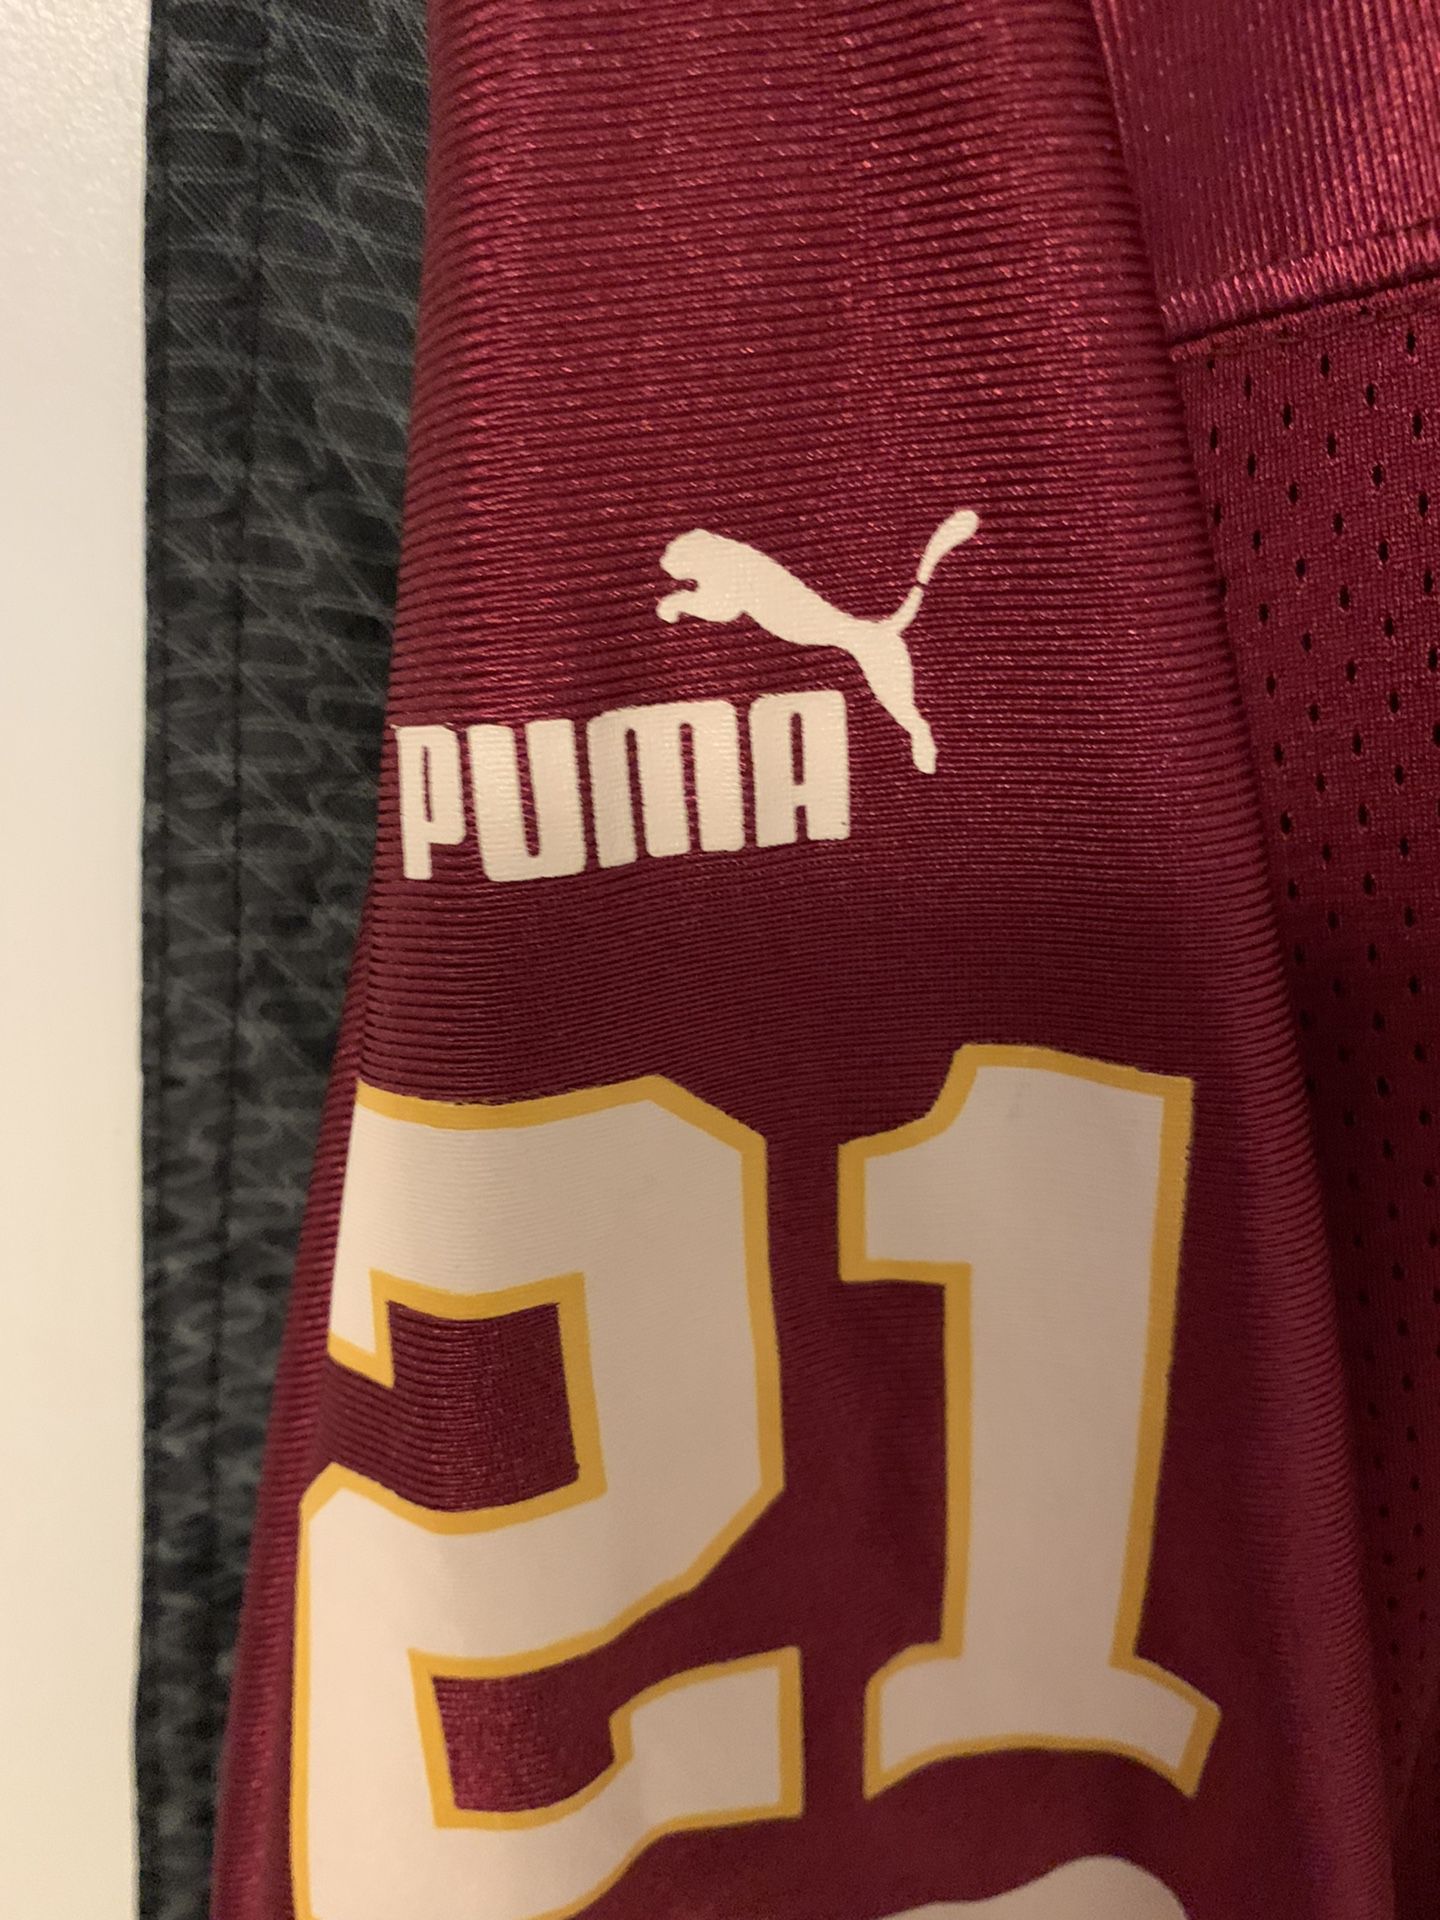 Deion Sanders #21 Puma Washington Redskins Jersey NFL Size Medium